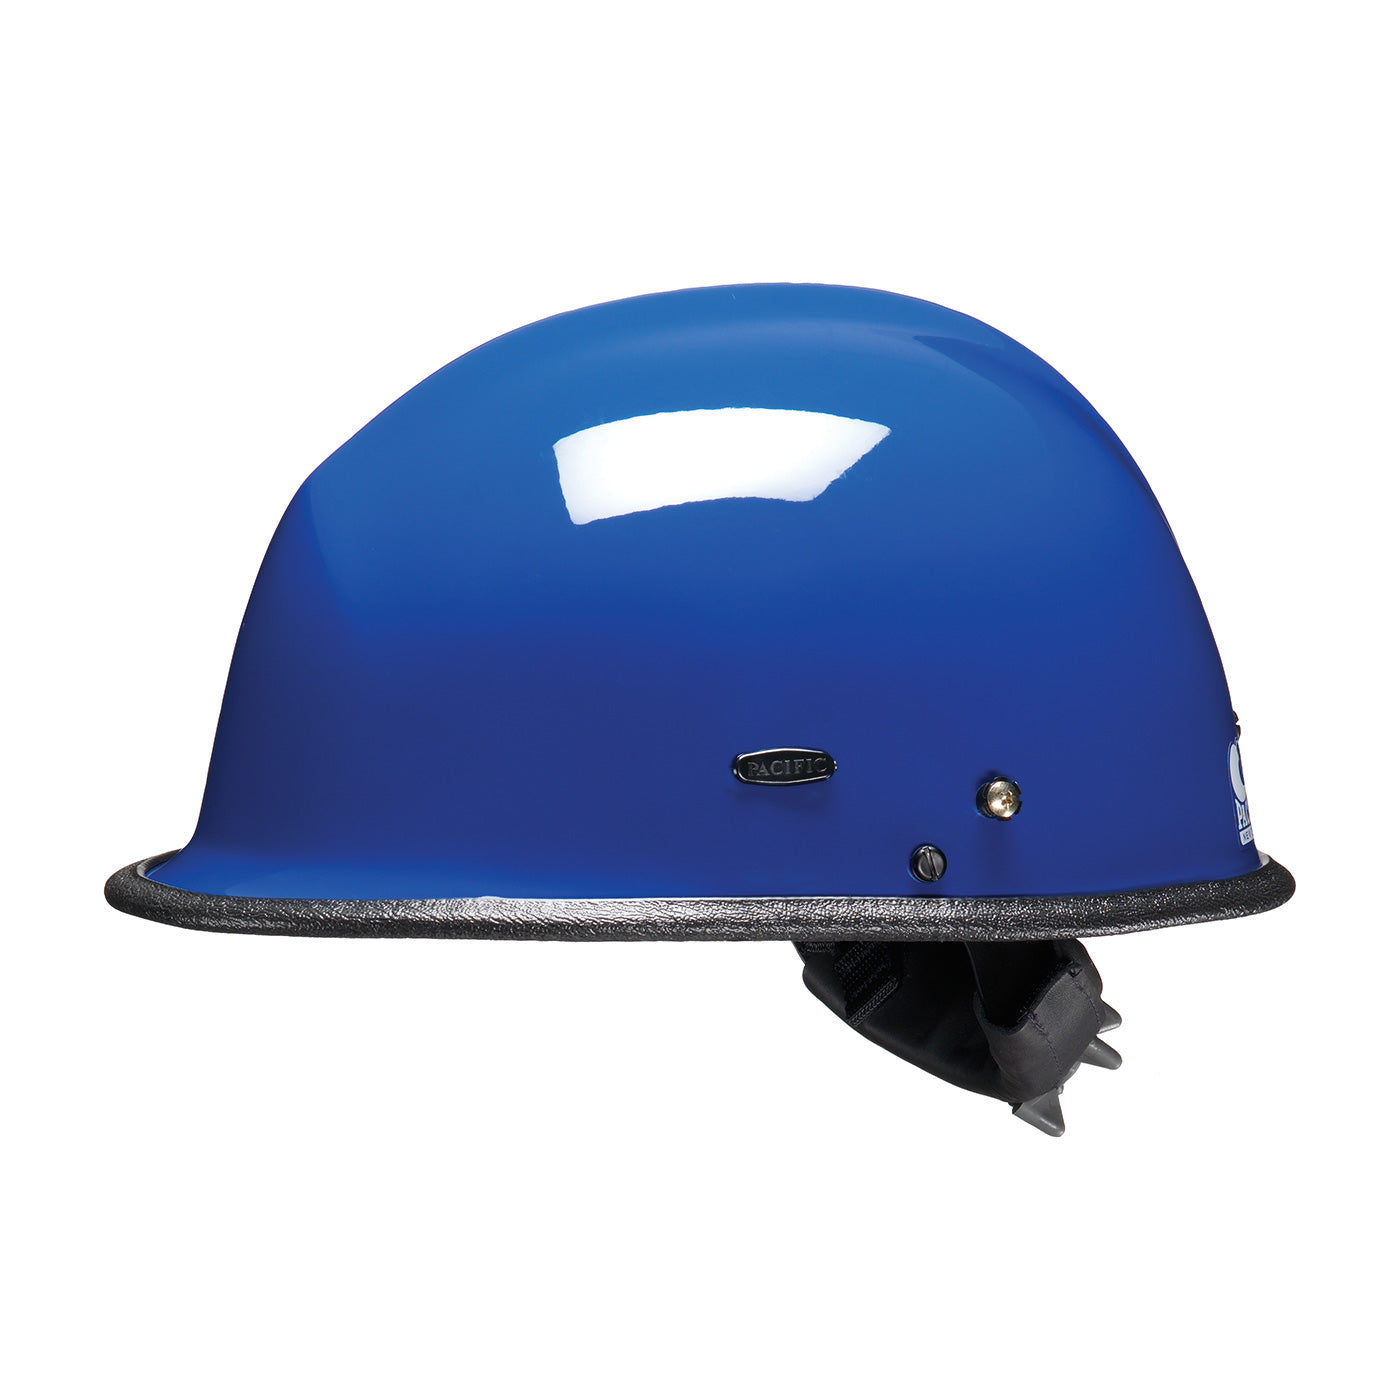 R3 Kiwi Rescue Helmet with ESS Goggle Mounts